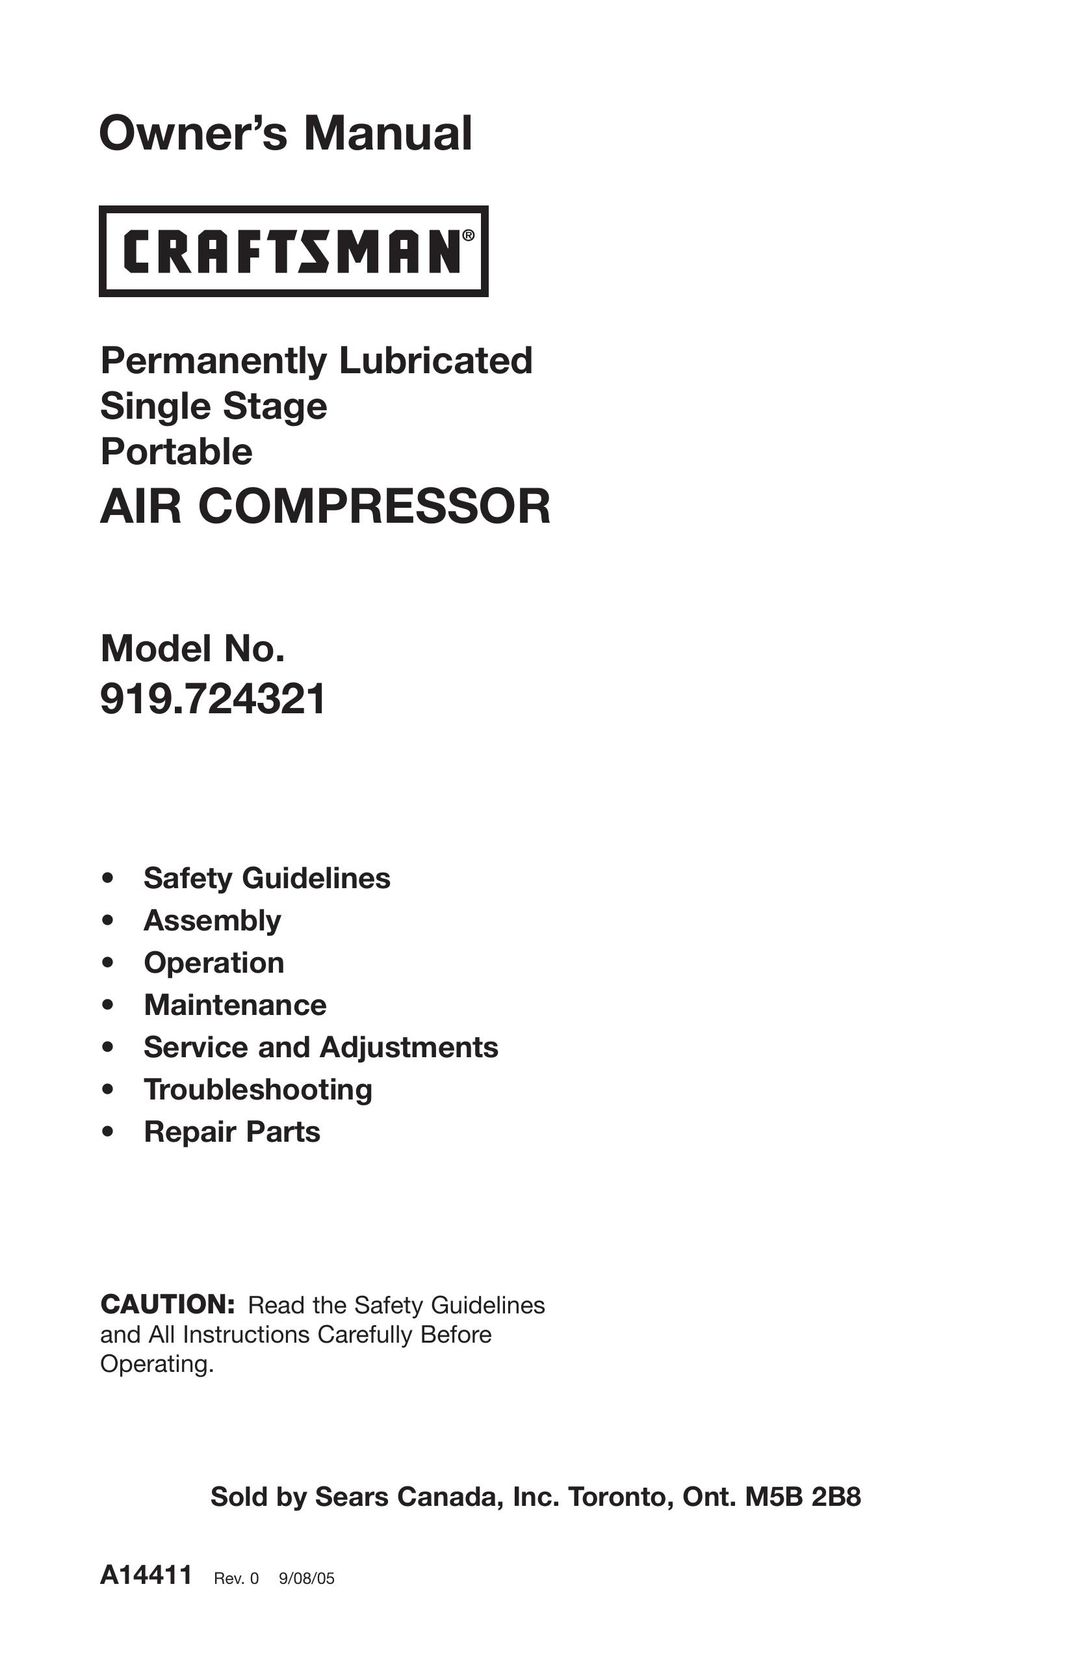 Craftsman 919.724321 Air Compressor User Manual